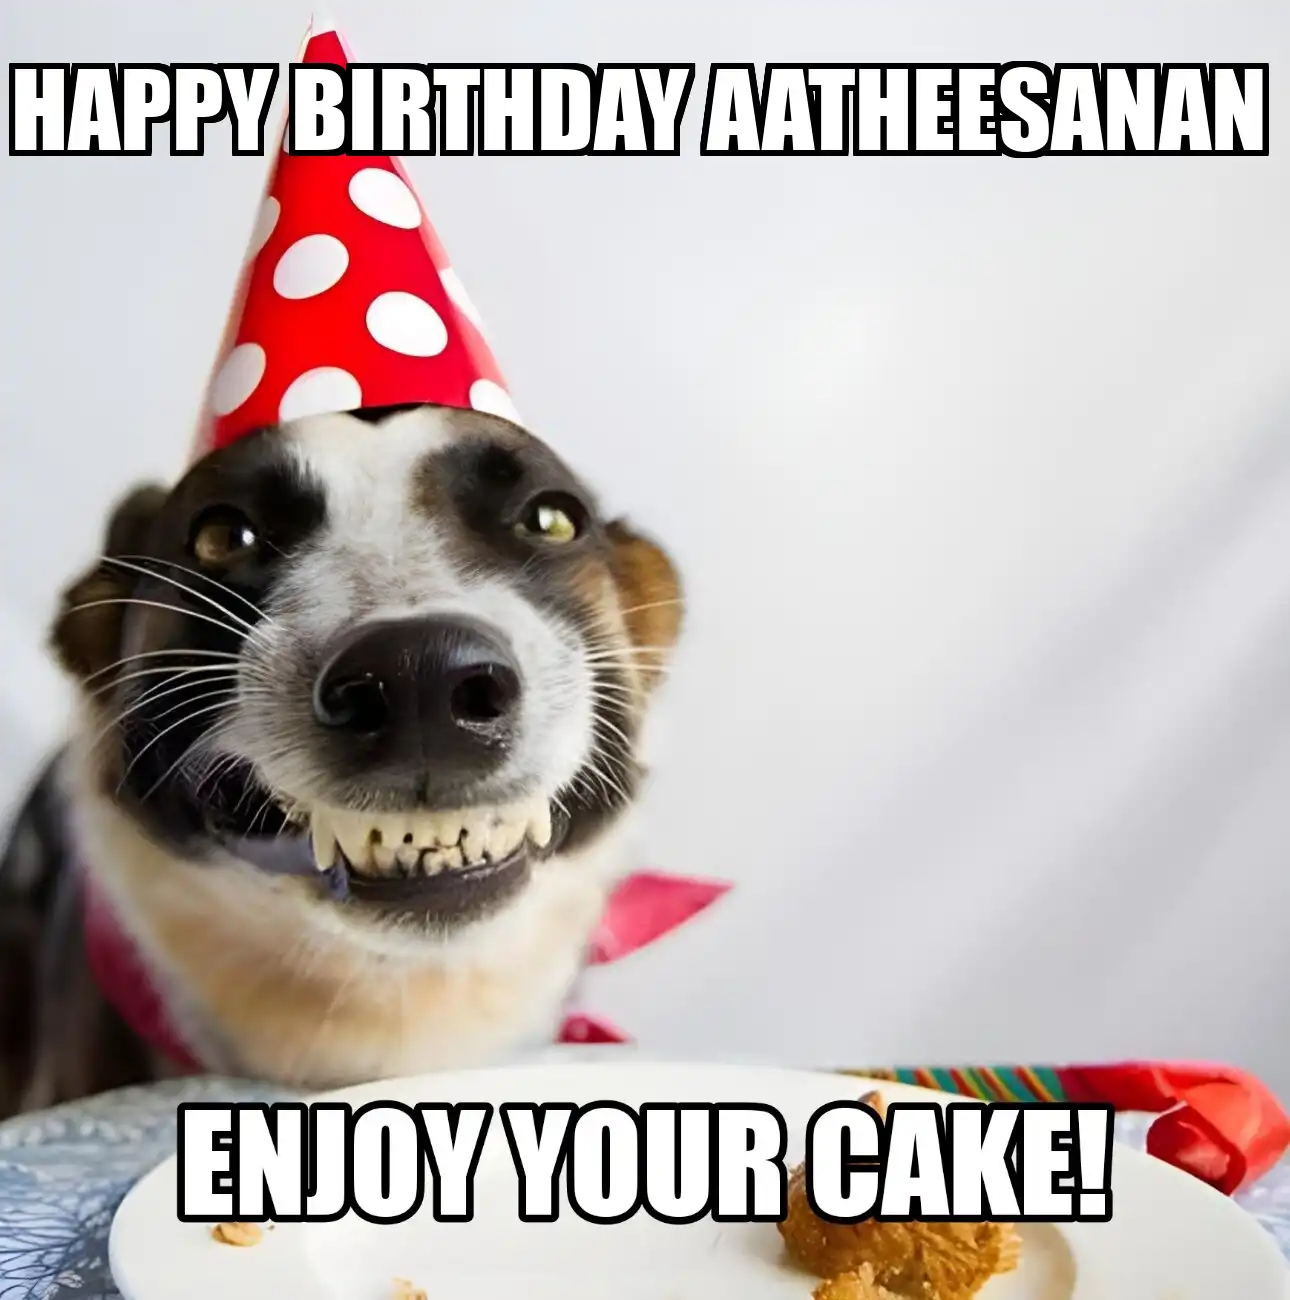 Happy Birthday Aatheesanan Enjoy Your Cake Dog Meme